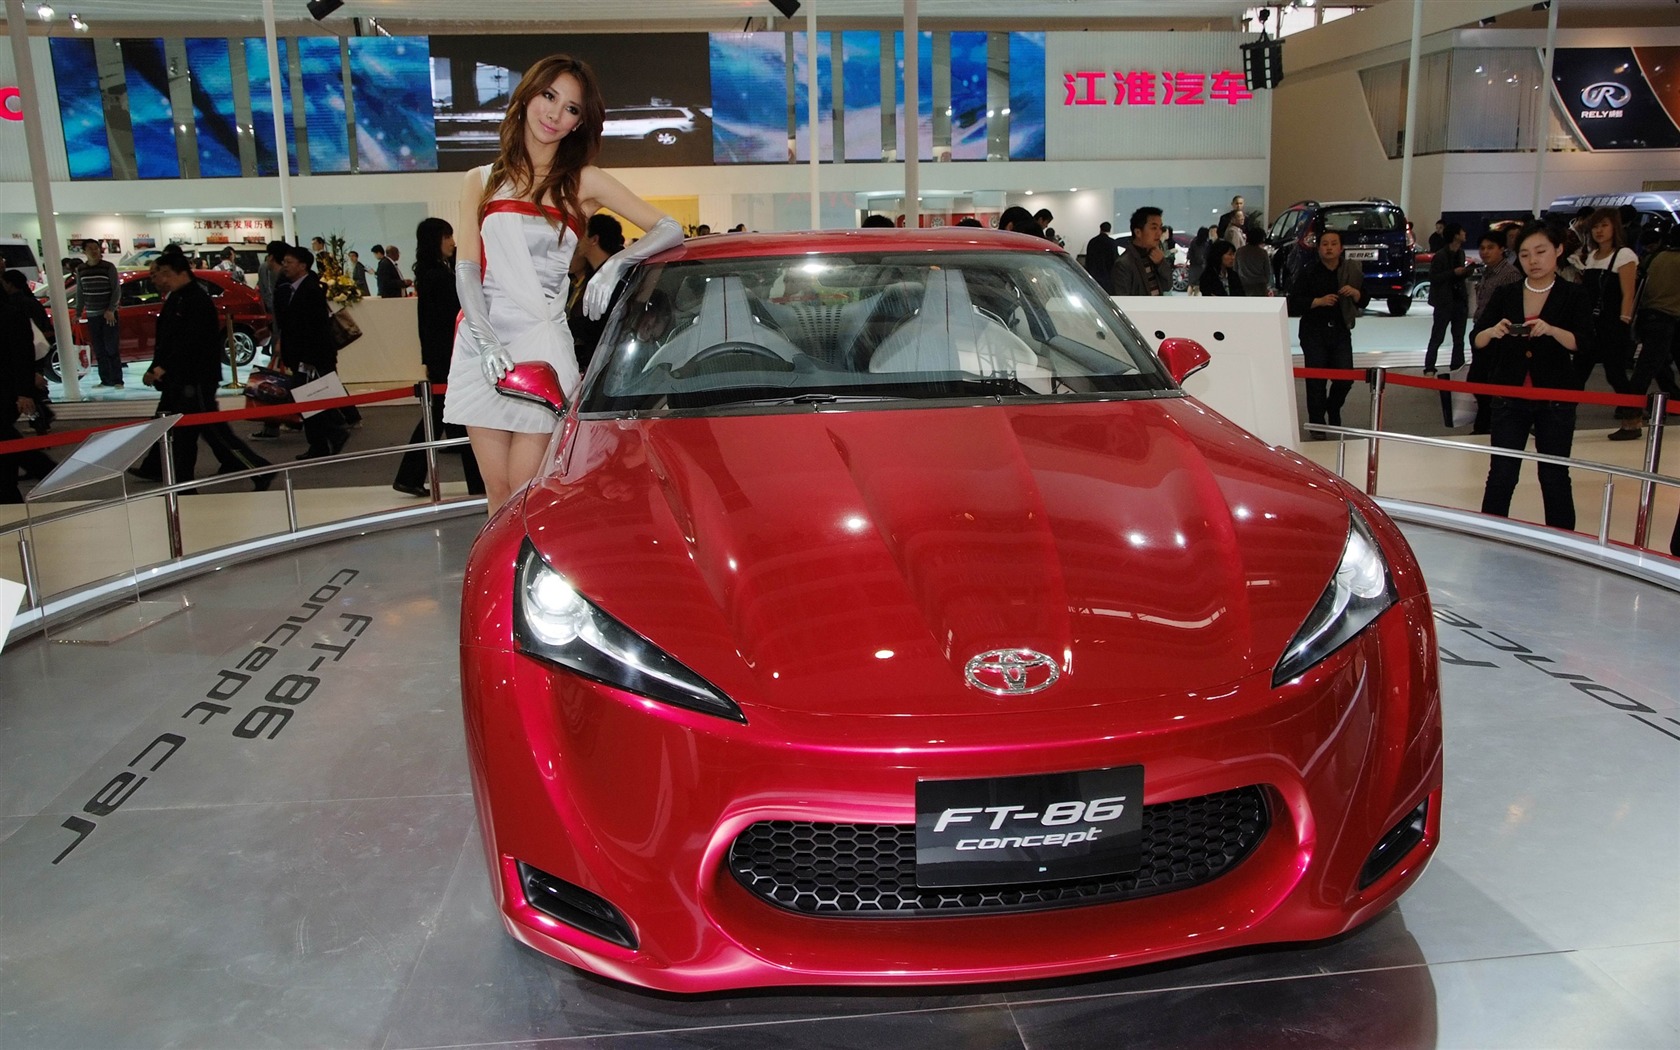 2010 Salón Internacional del Automóvil de Beijing Heung Che belleza (obras barras de refuerzo) #23 - 1680x1050